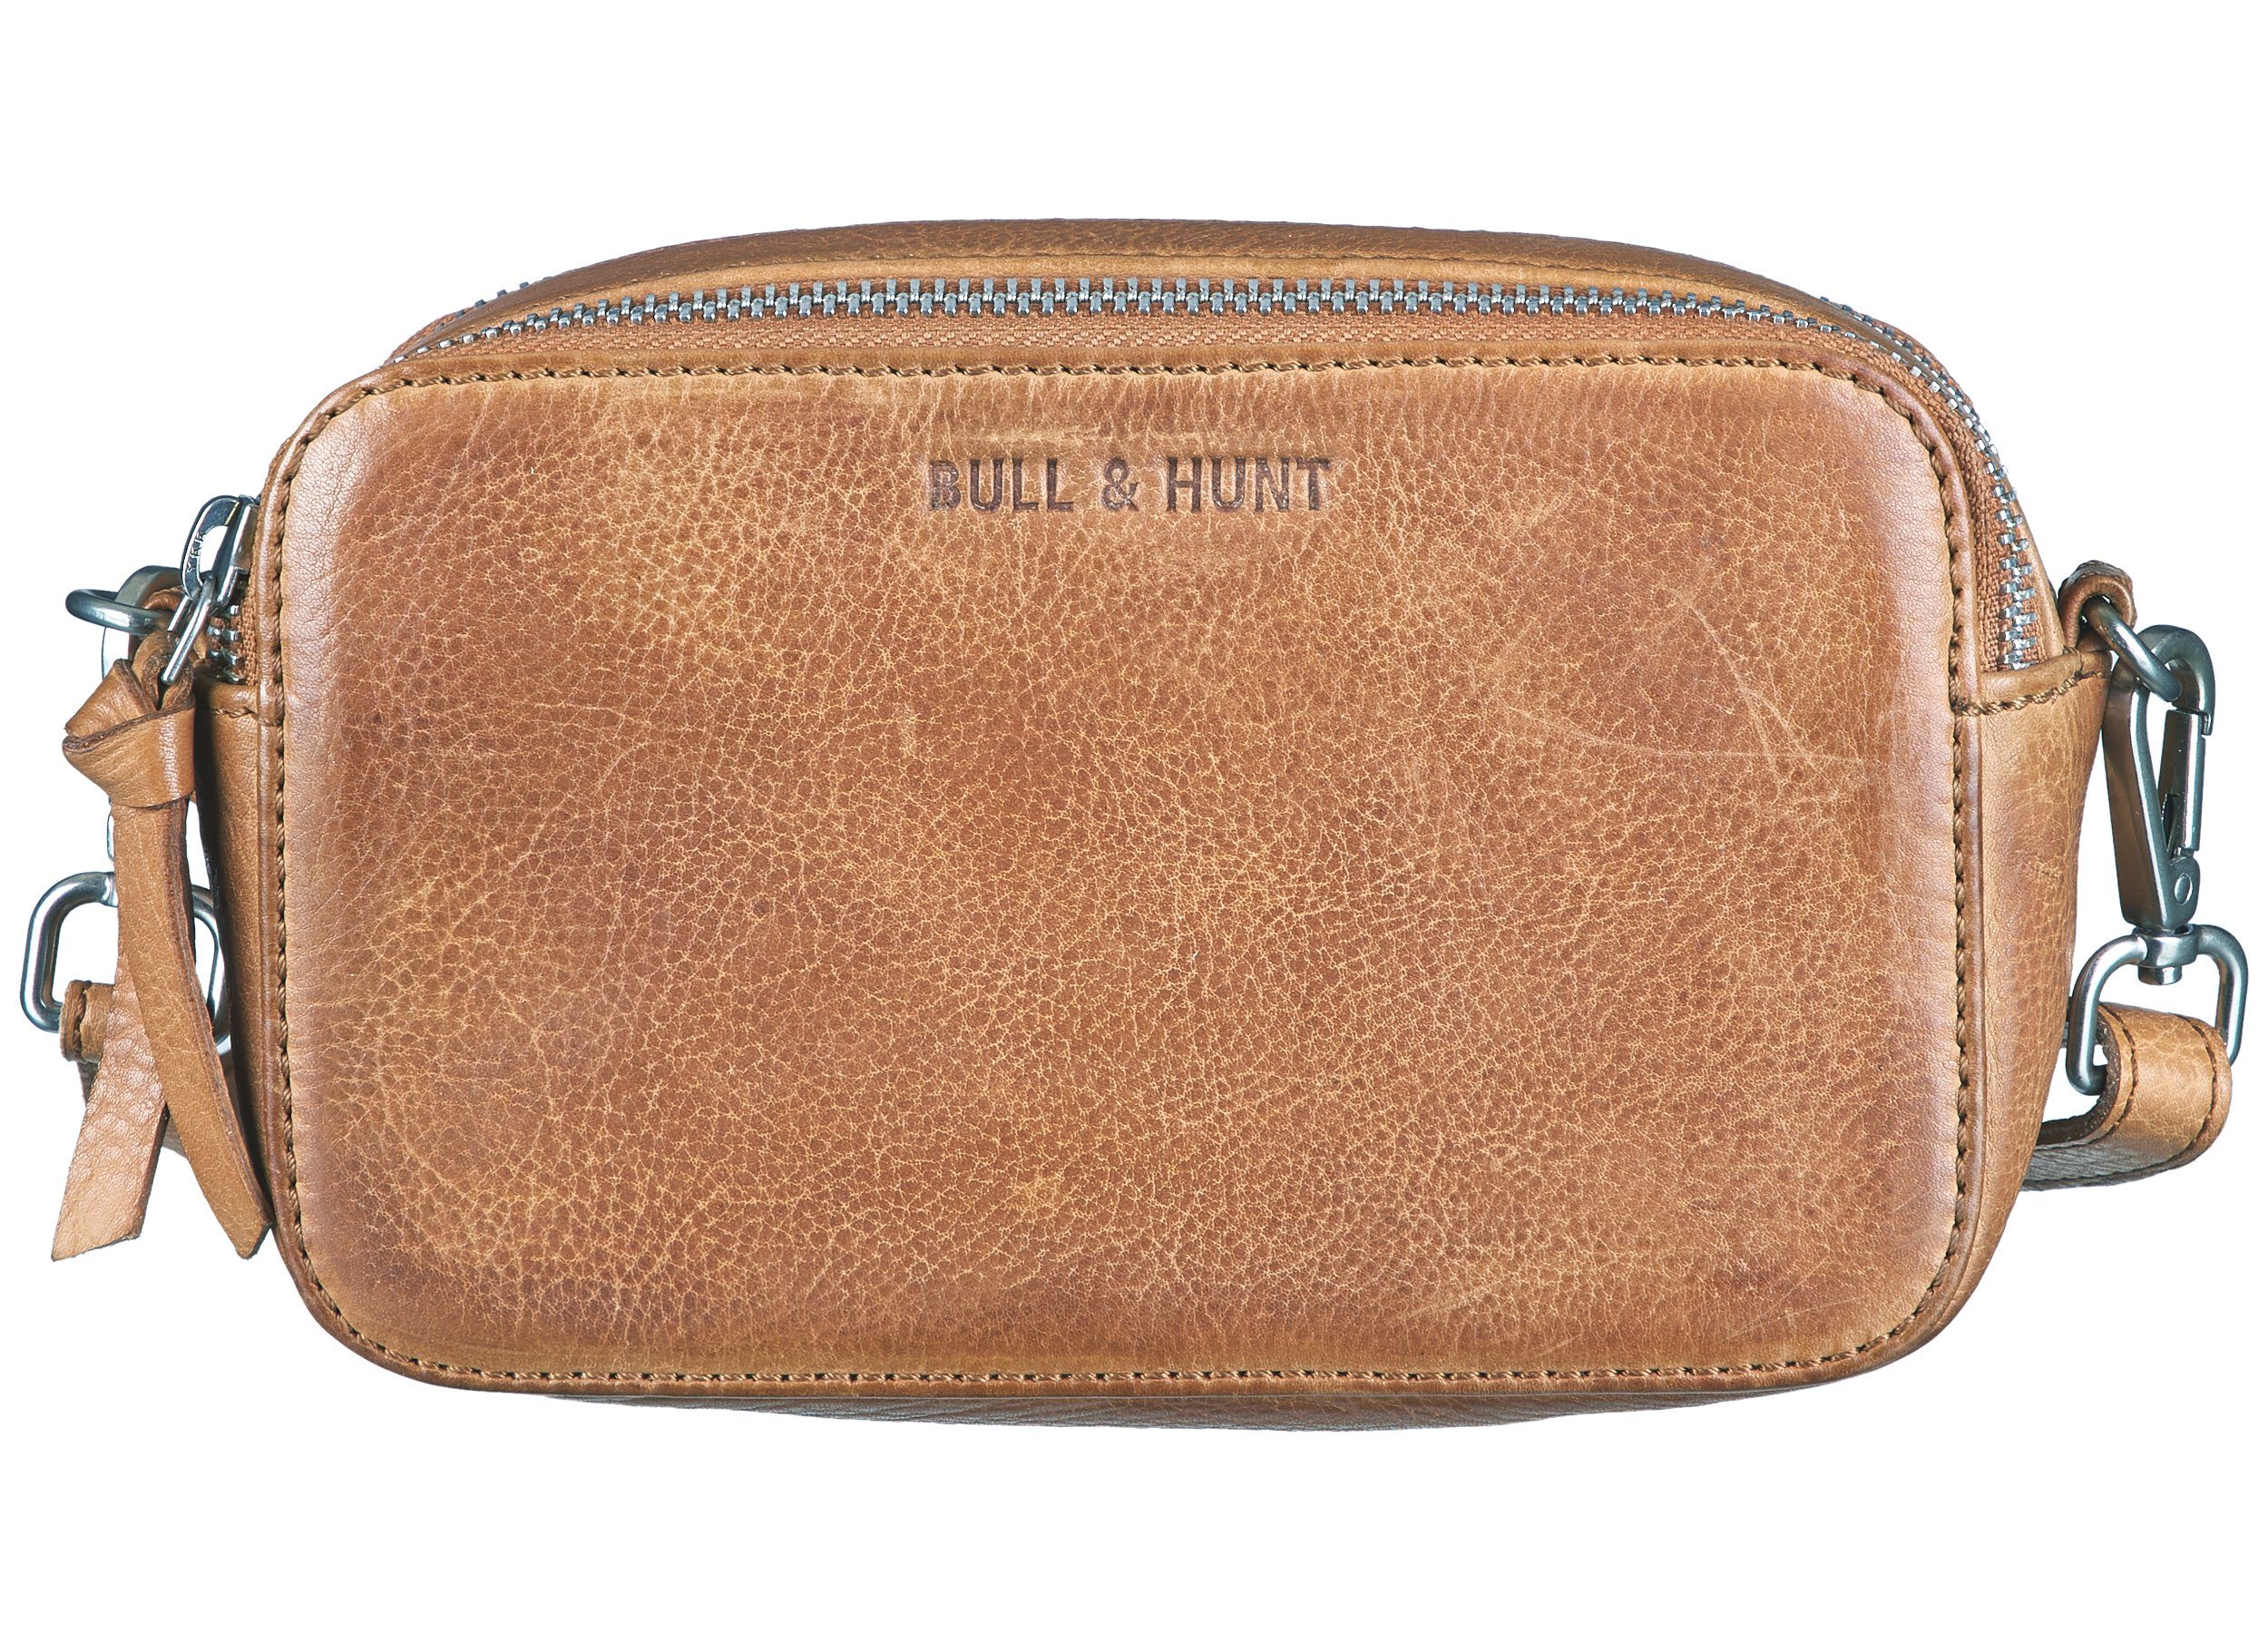 Bull & Hunt light microbag tan Handtasche